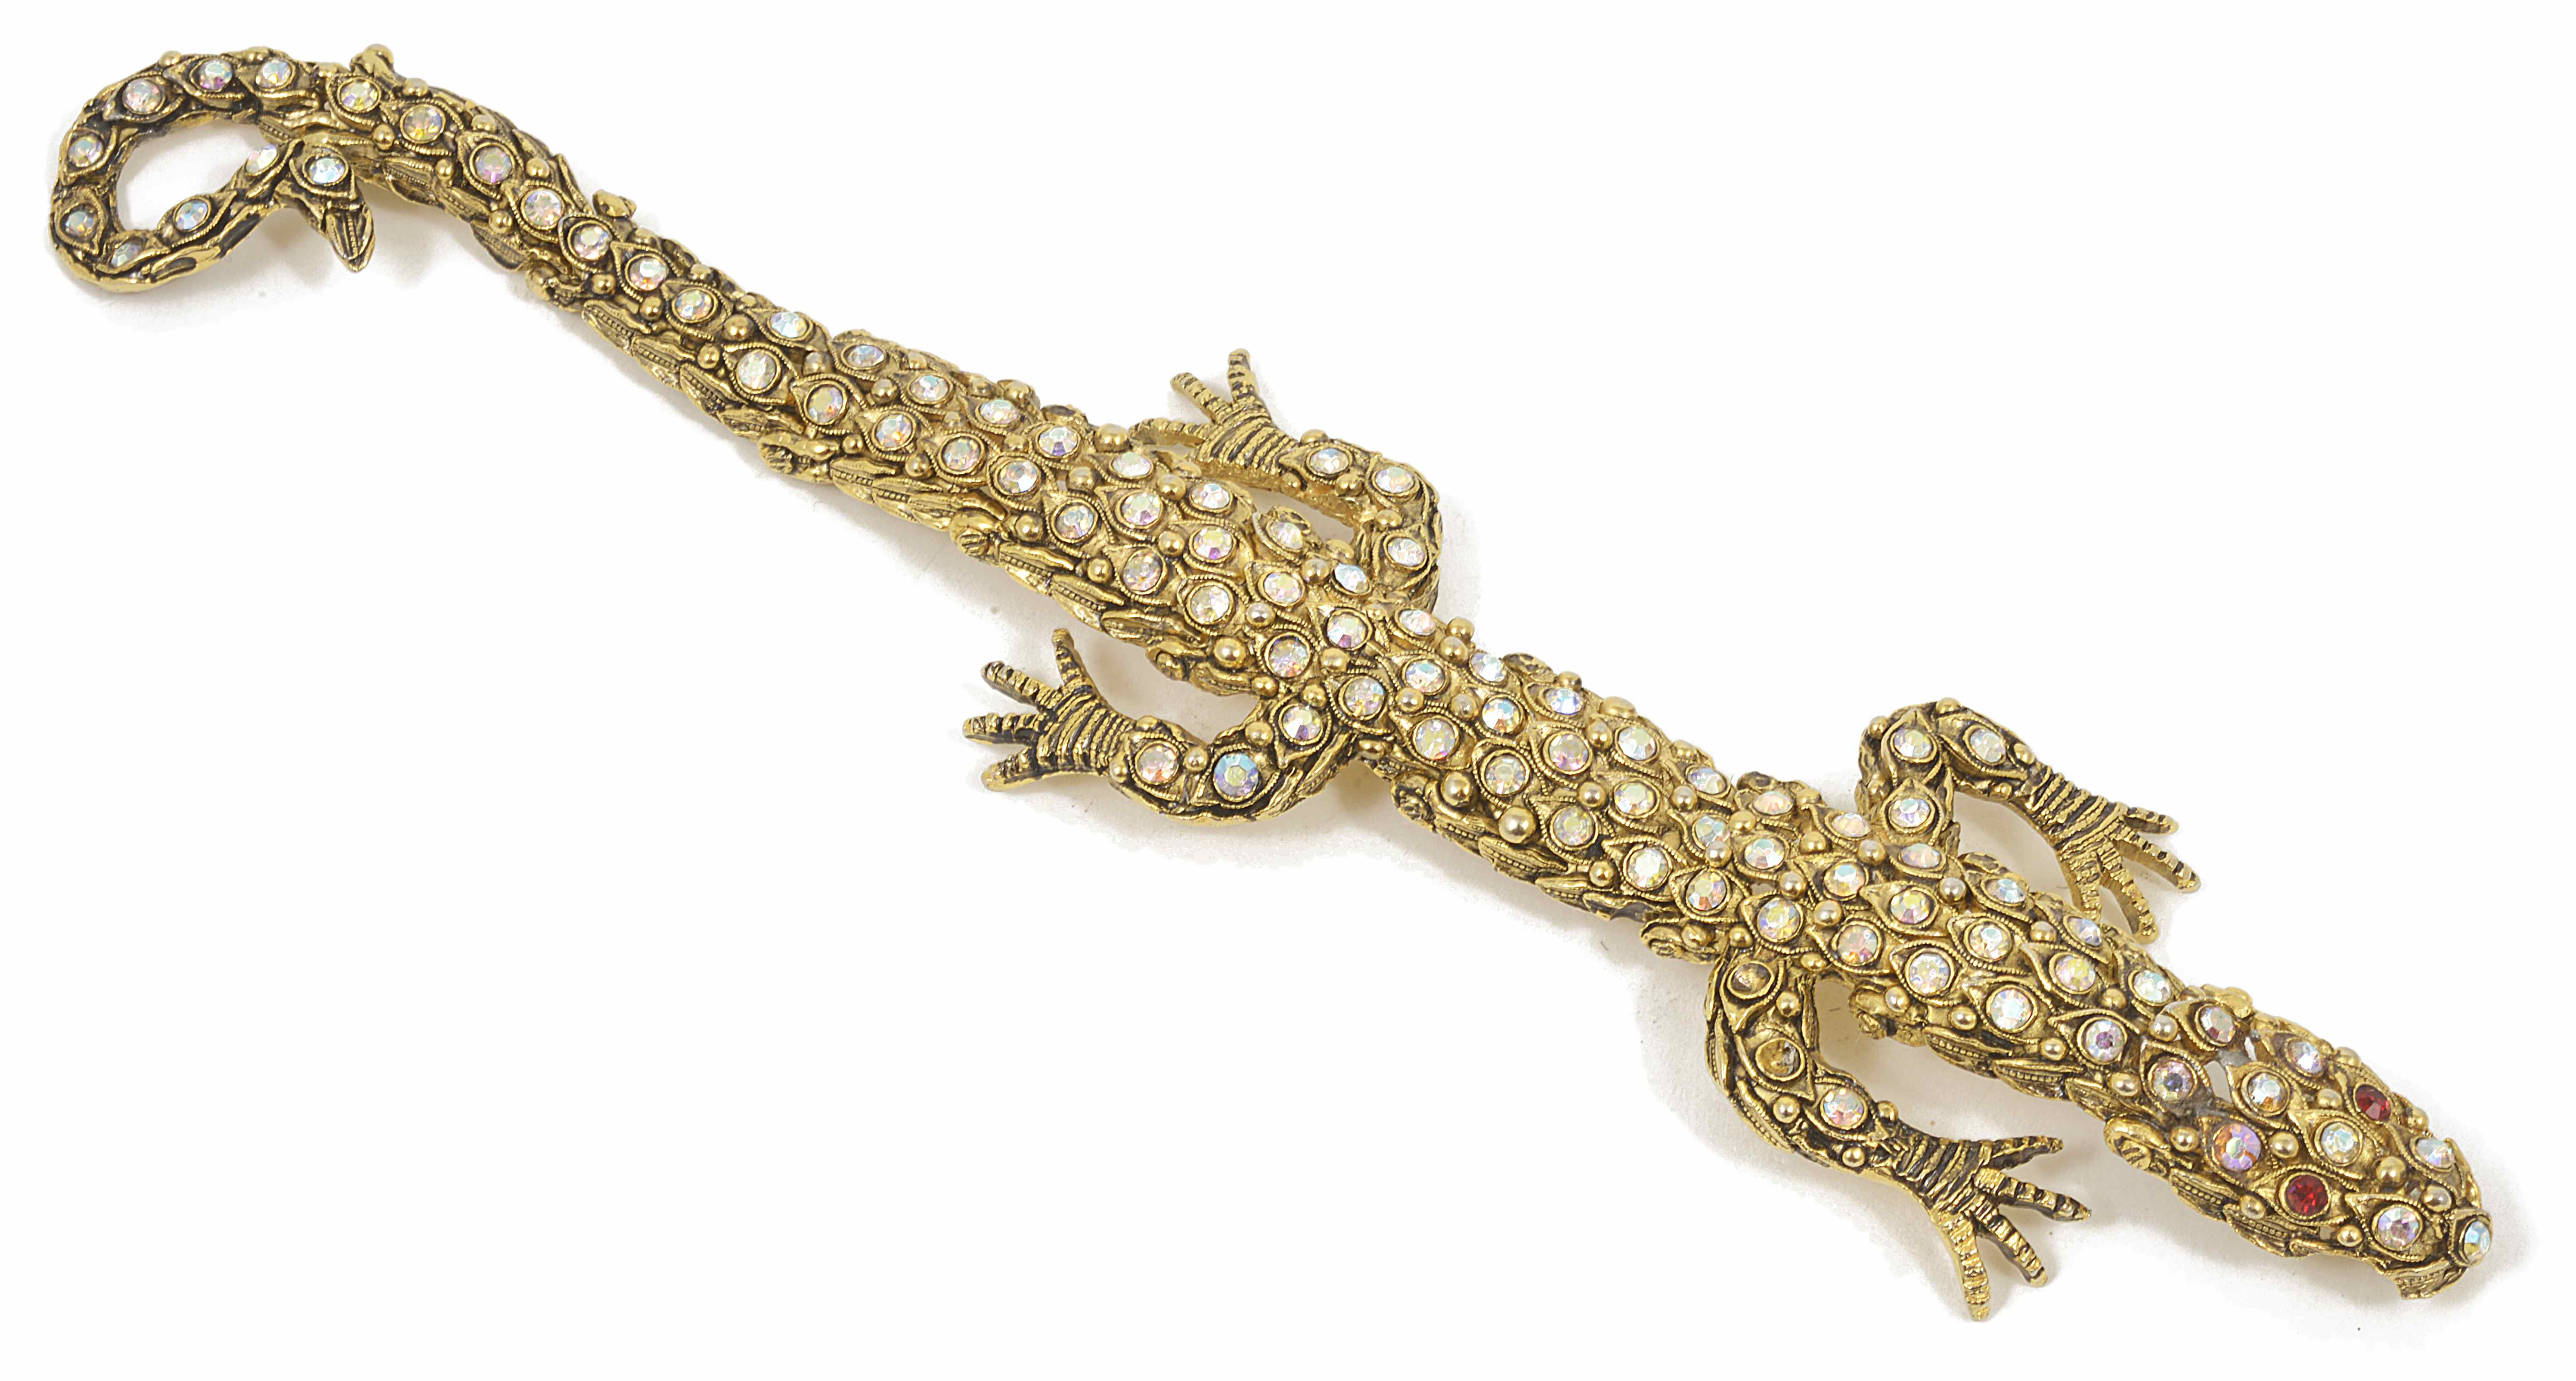 An amusing vintage articulated lizard costume bracelet set overall with arora baurealis rhinestones,